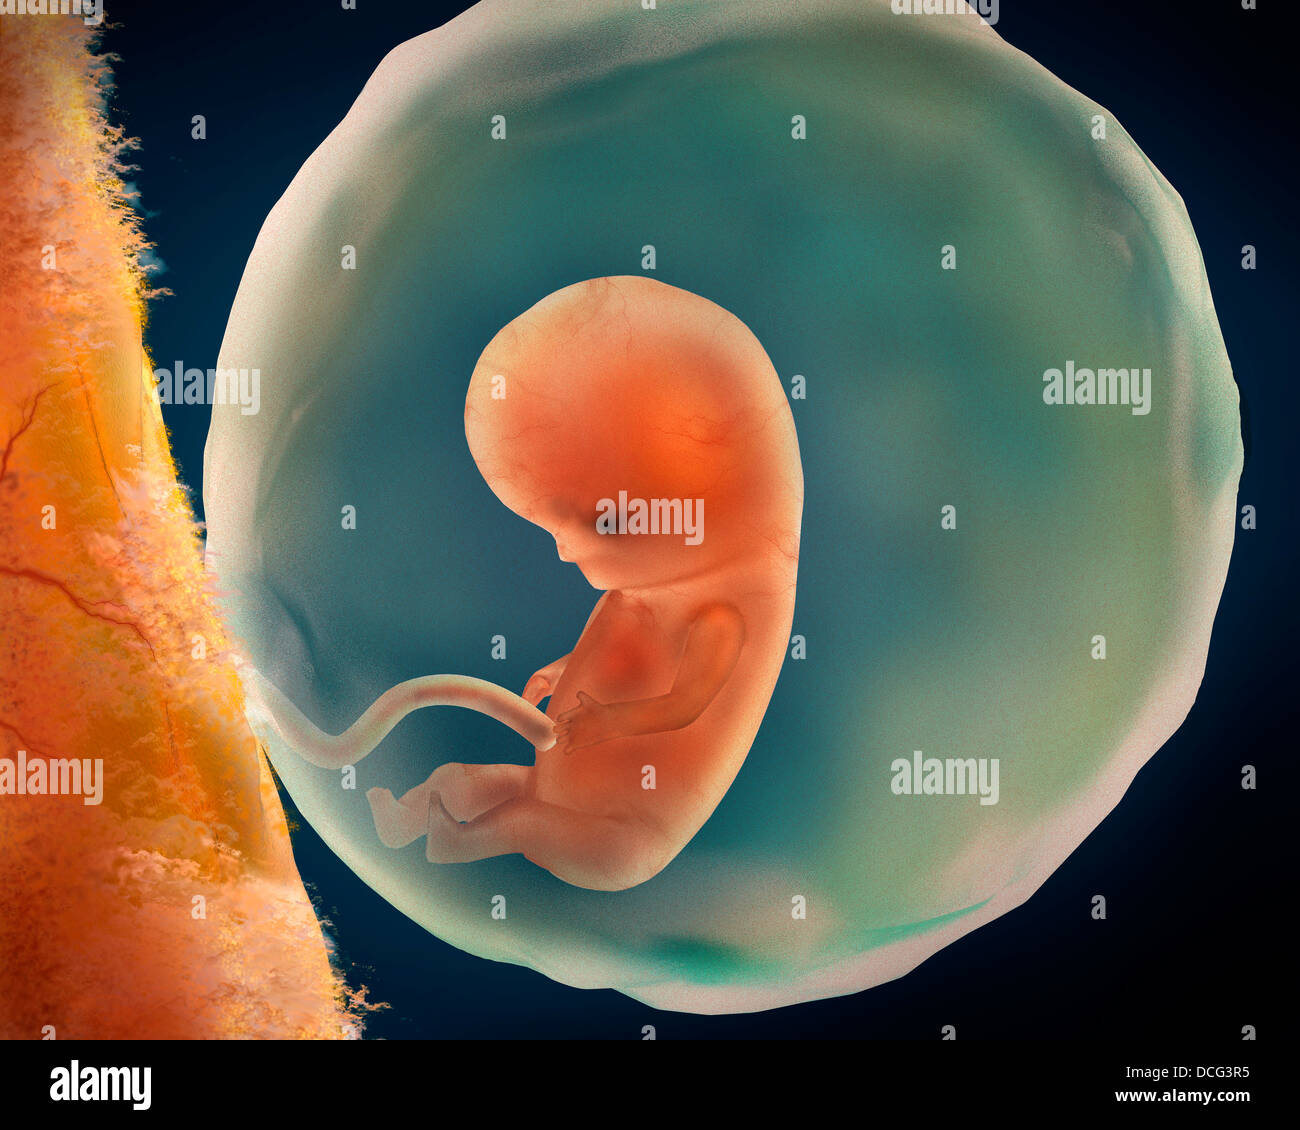 Medical illustration of fetus development at 9 weeks. Stock Photo